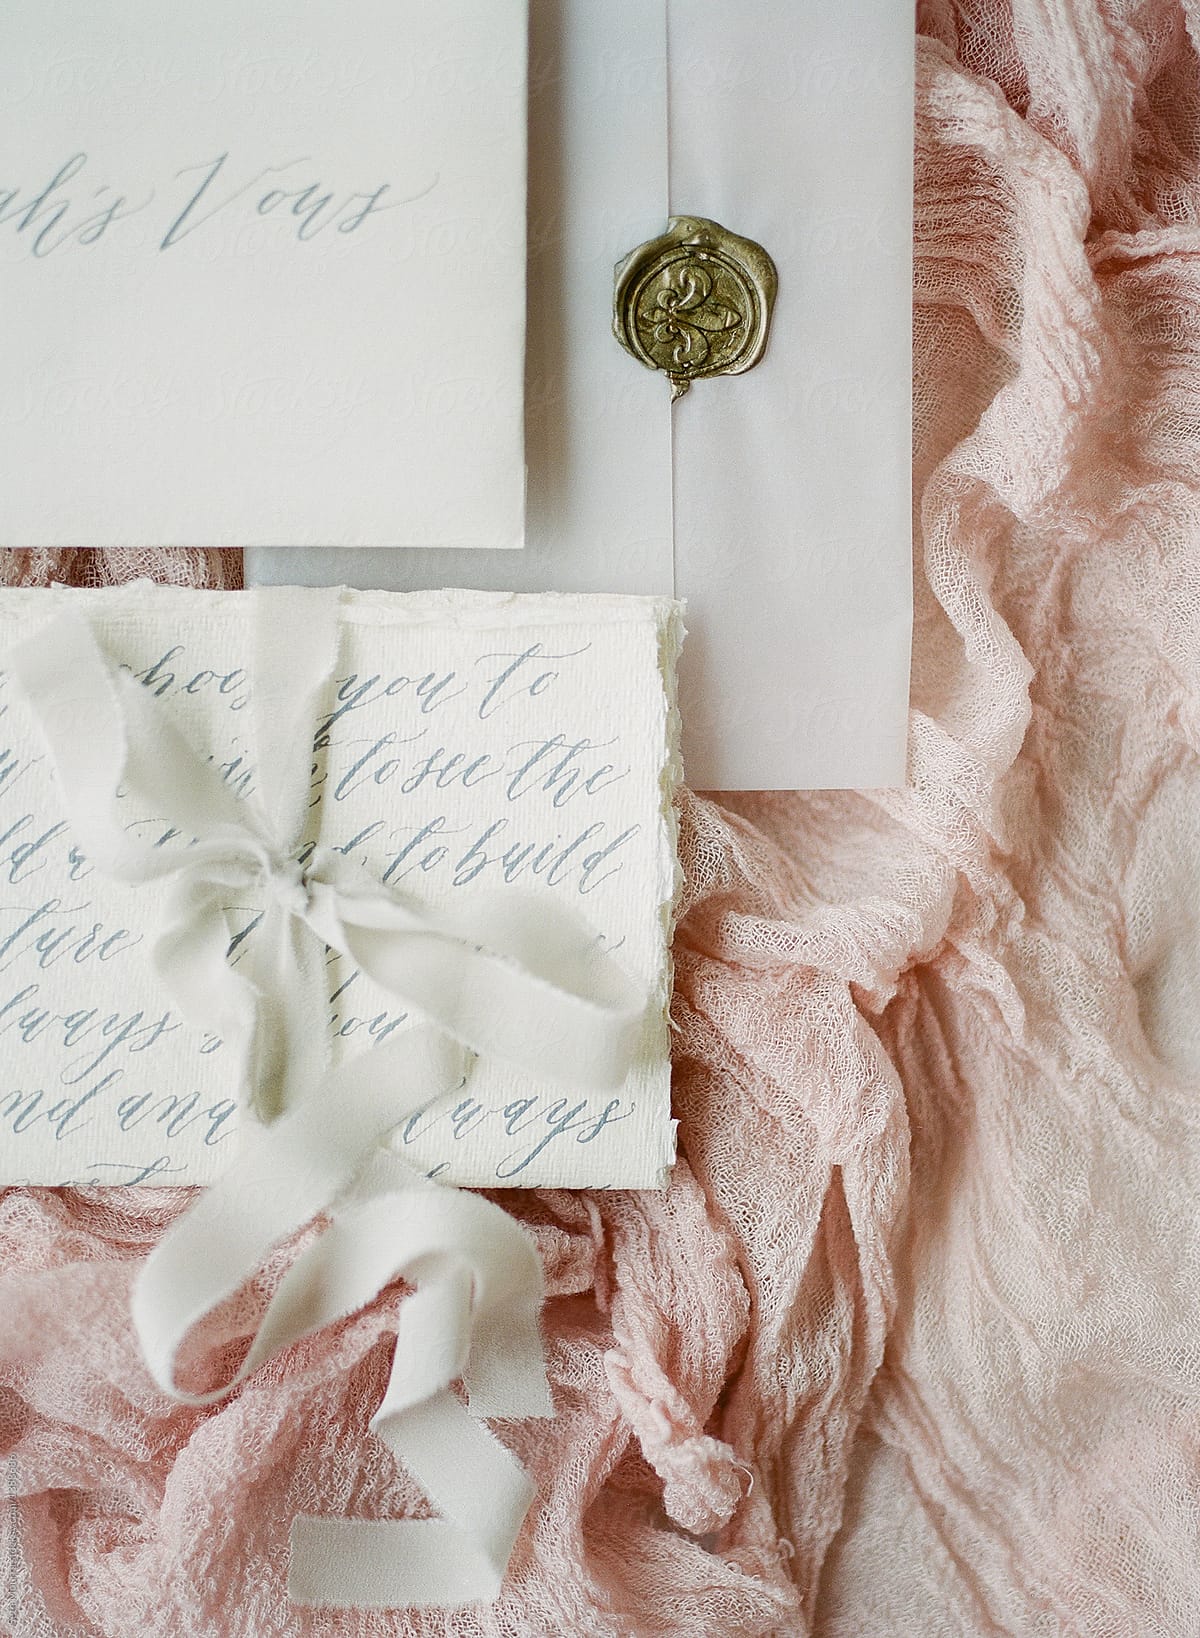 Romantic hand written wedding vows